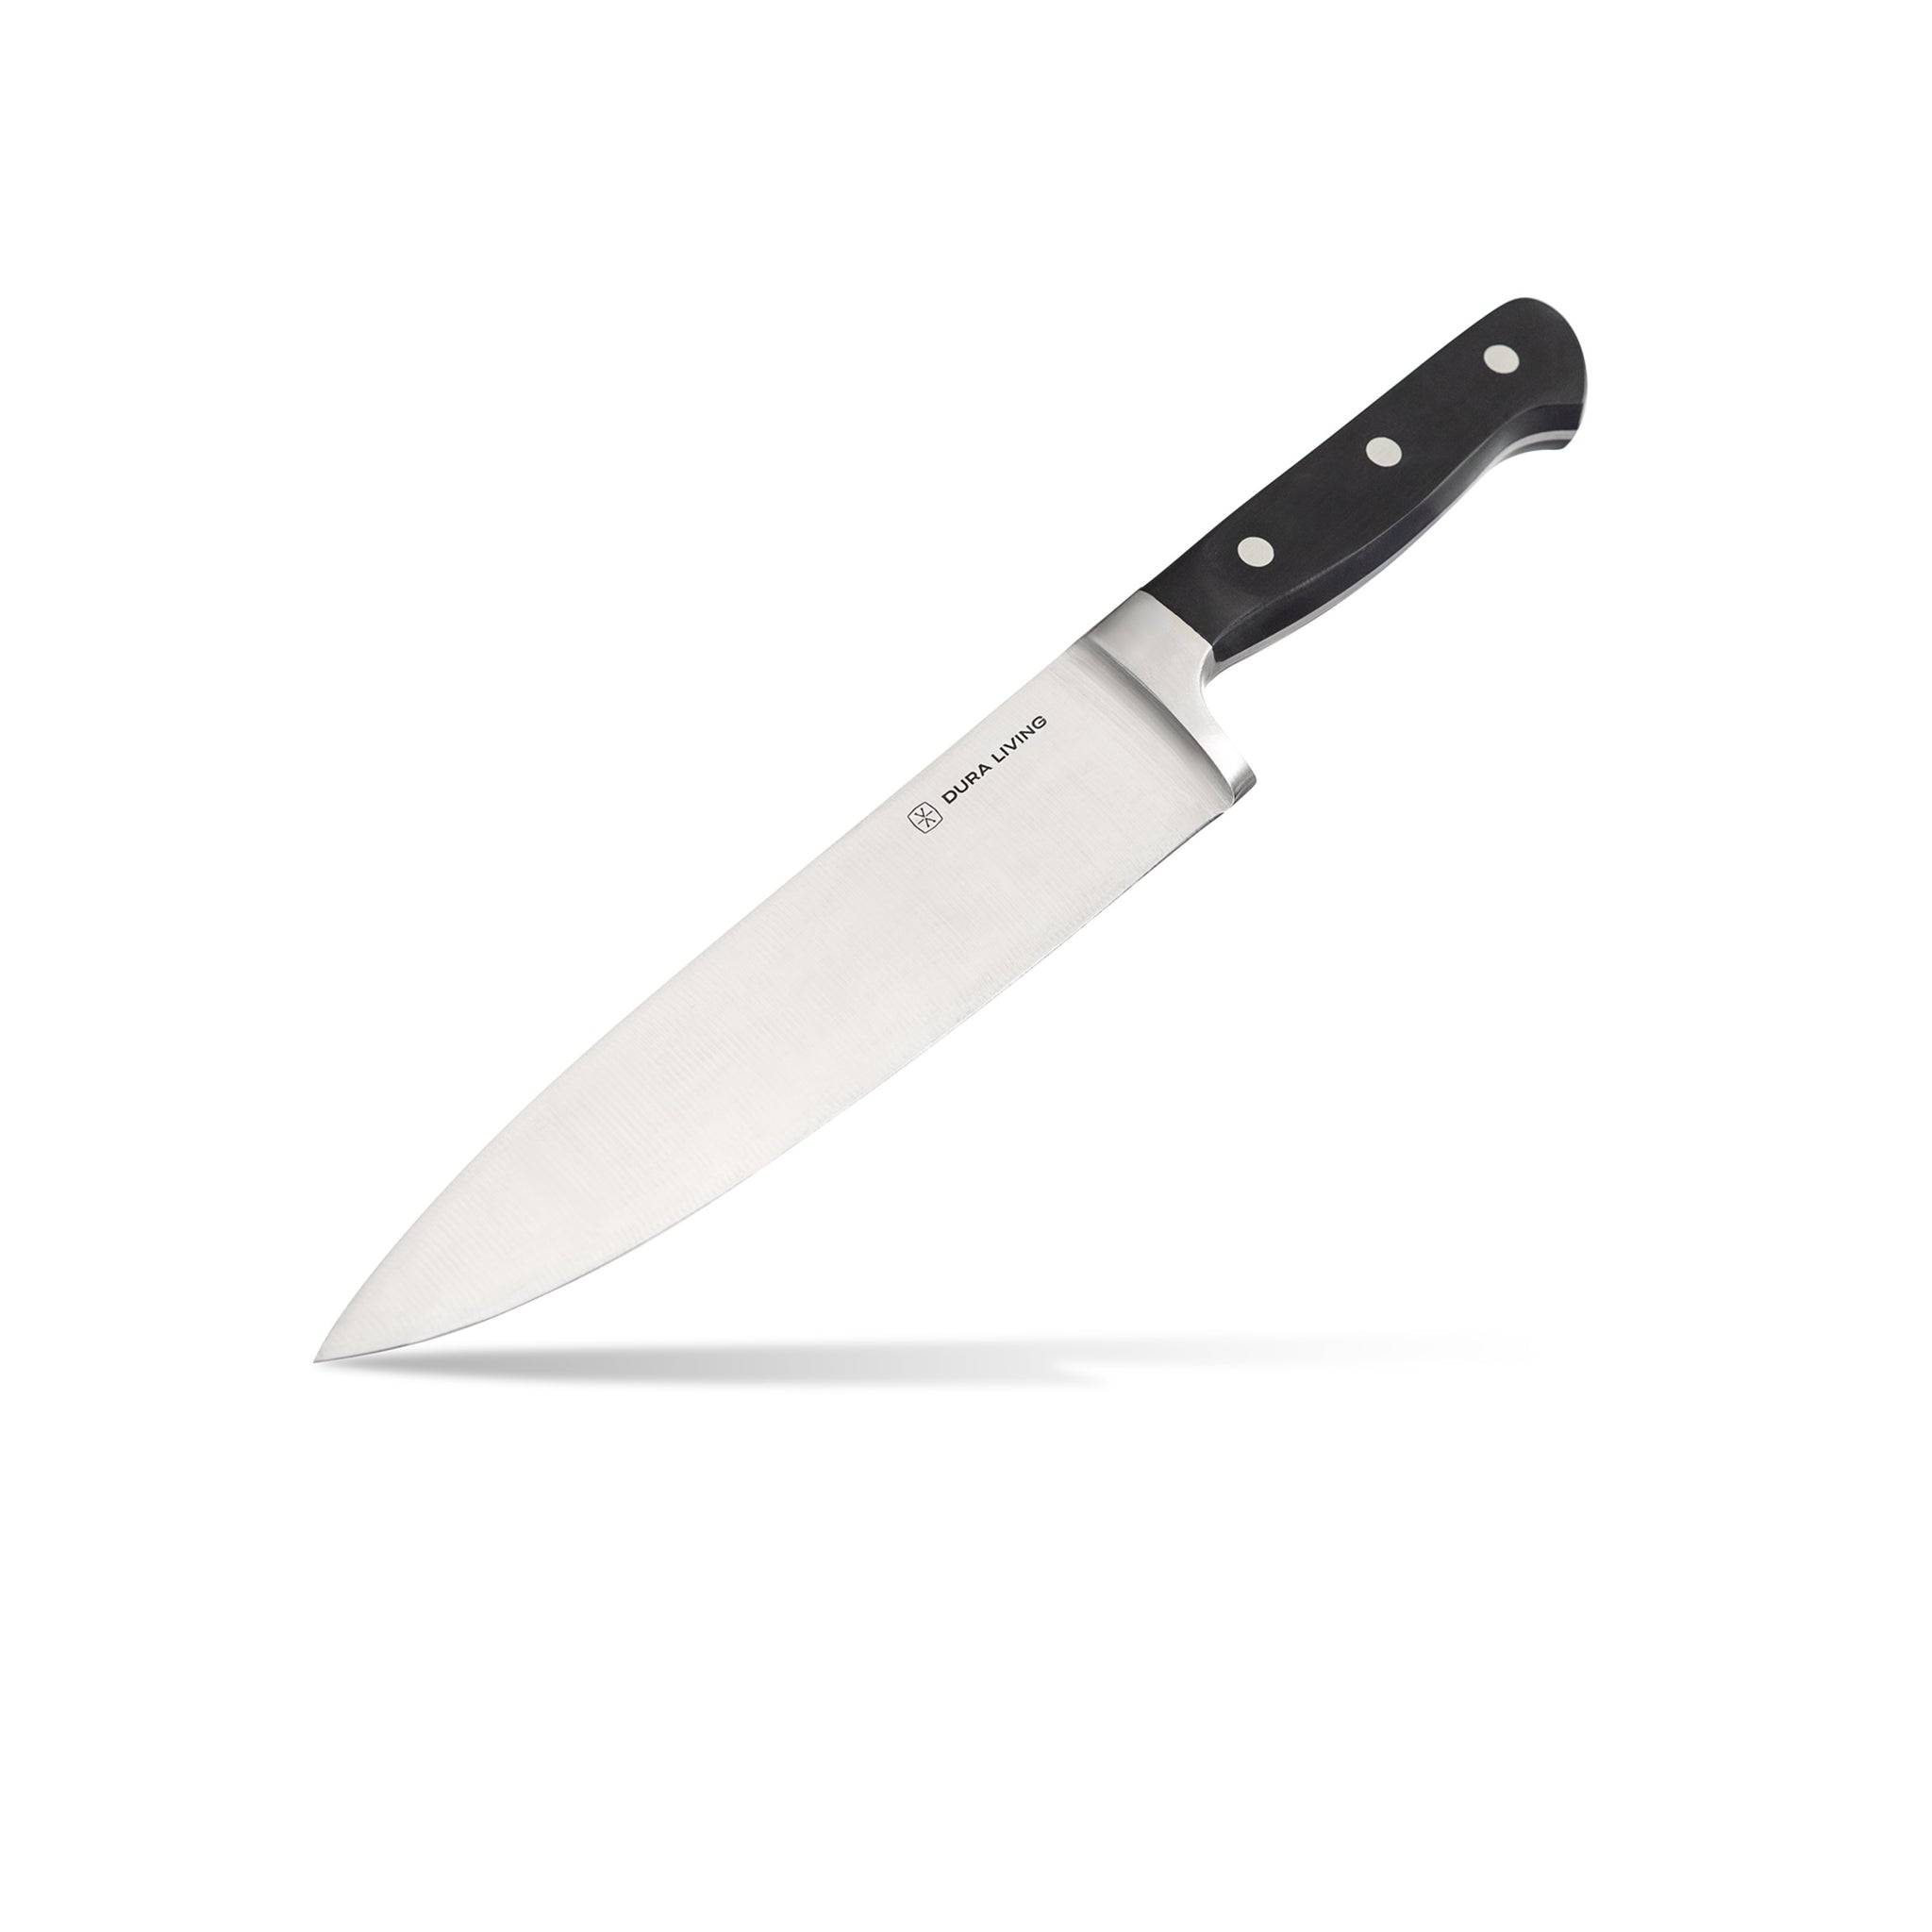 Superior 8 inch Chef Knife - Black